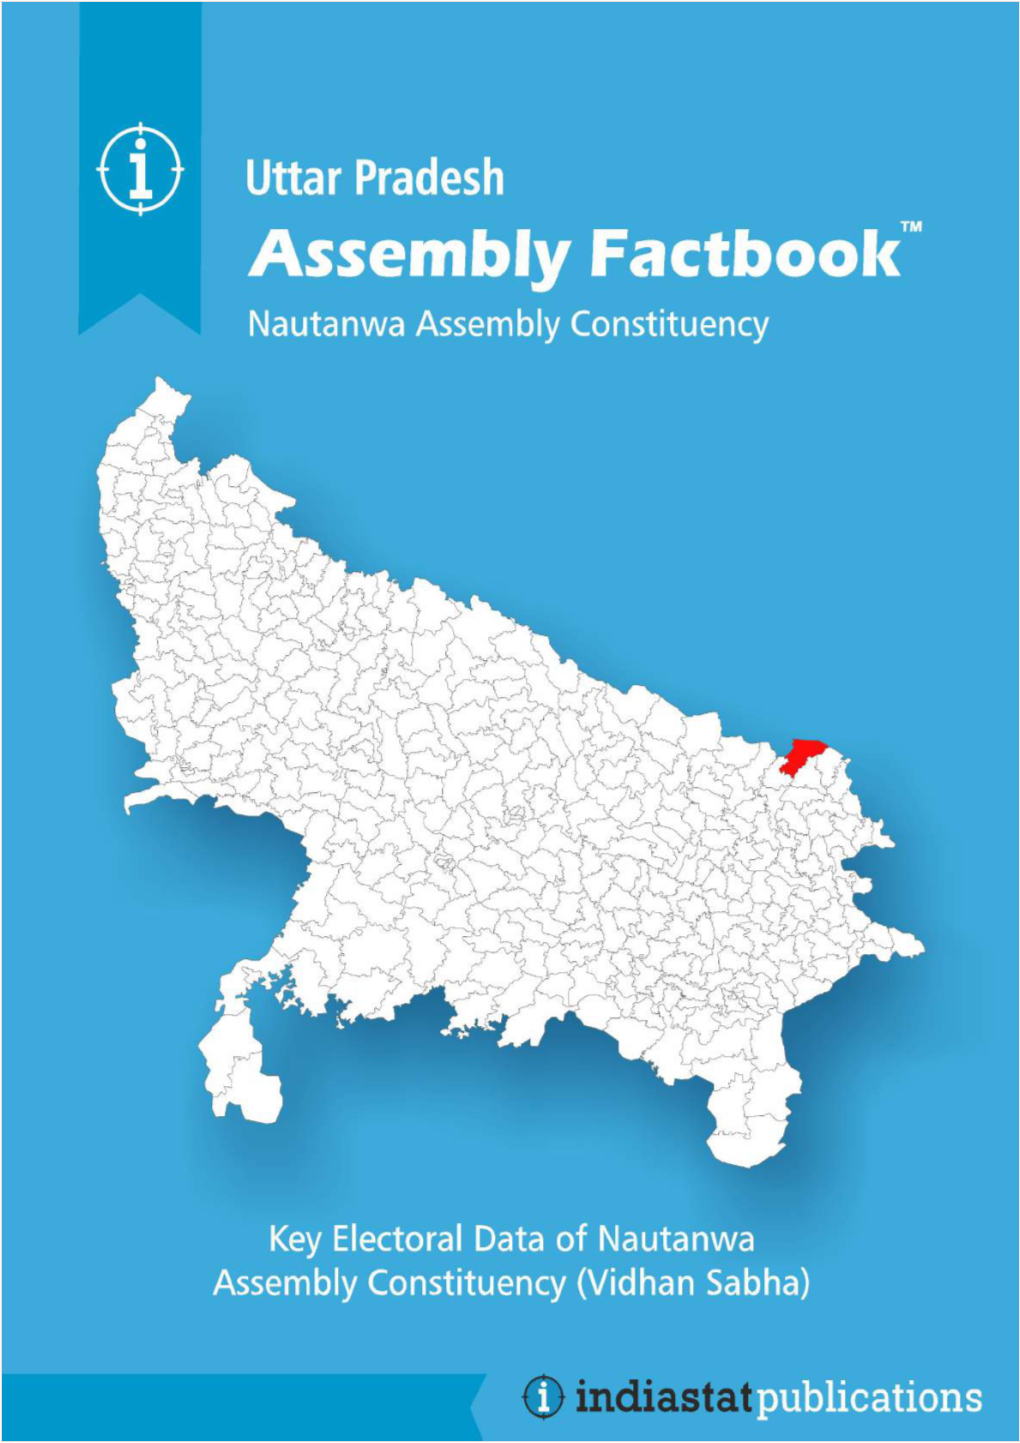 Nautanwa Assembly Uttar Pradesh Factbook